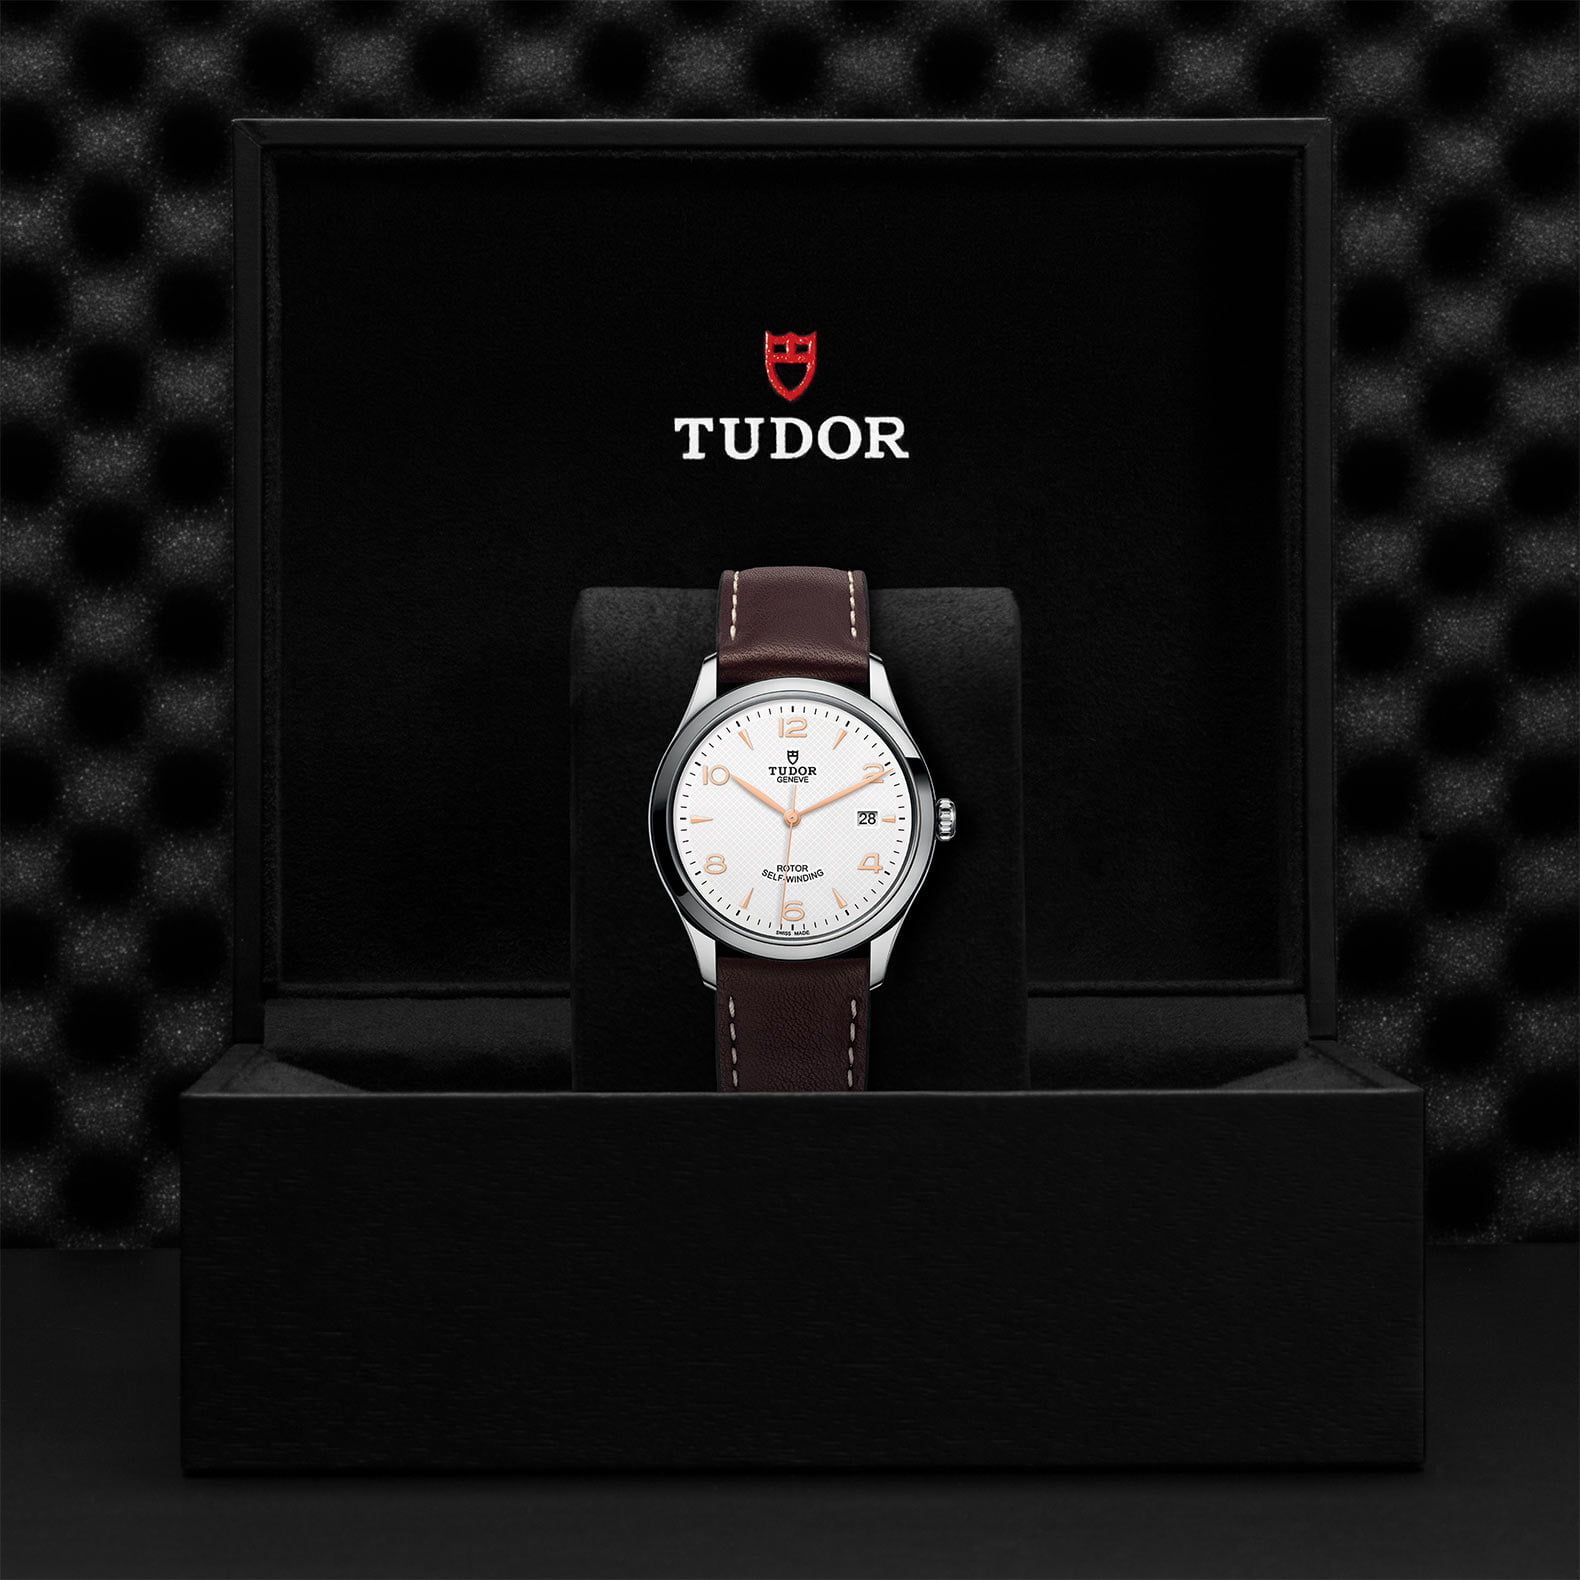 M91550 0012 Tudor Watch Carousel 4 4 10 2023 1